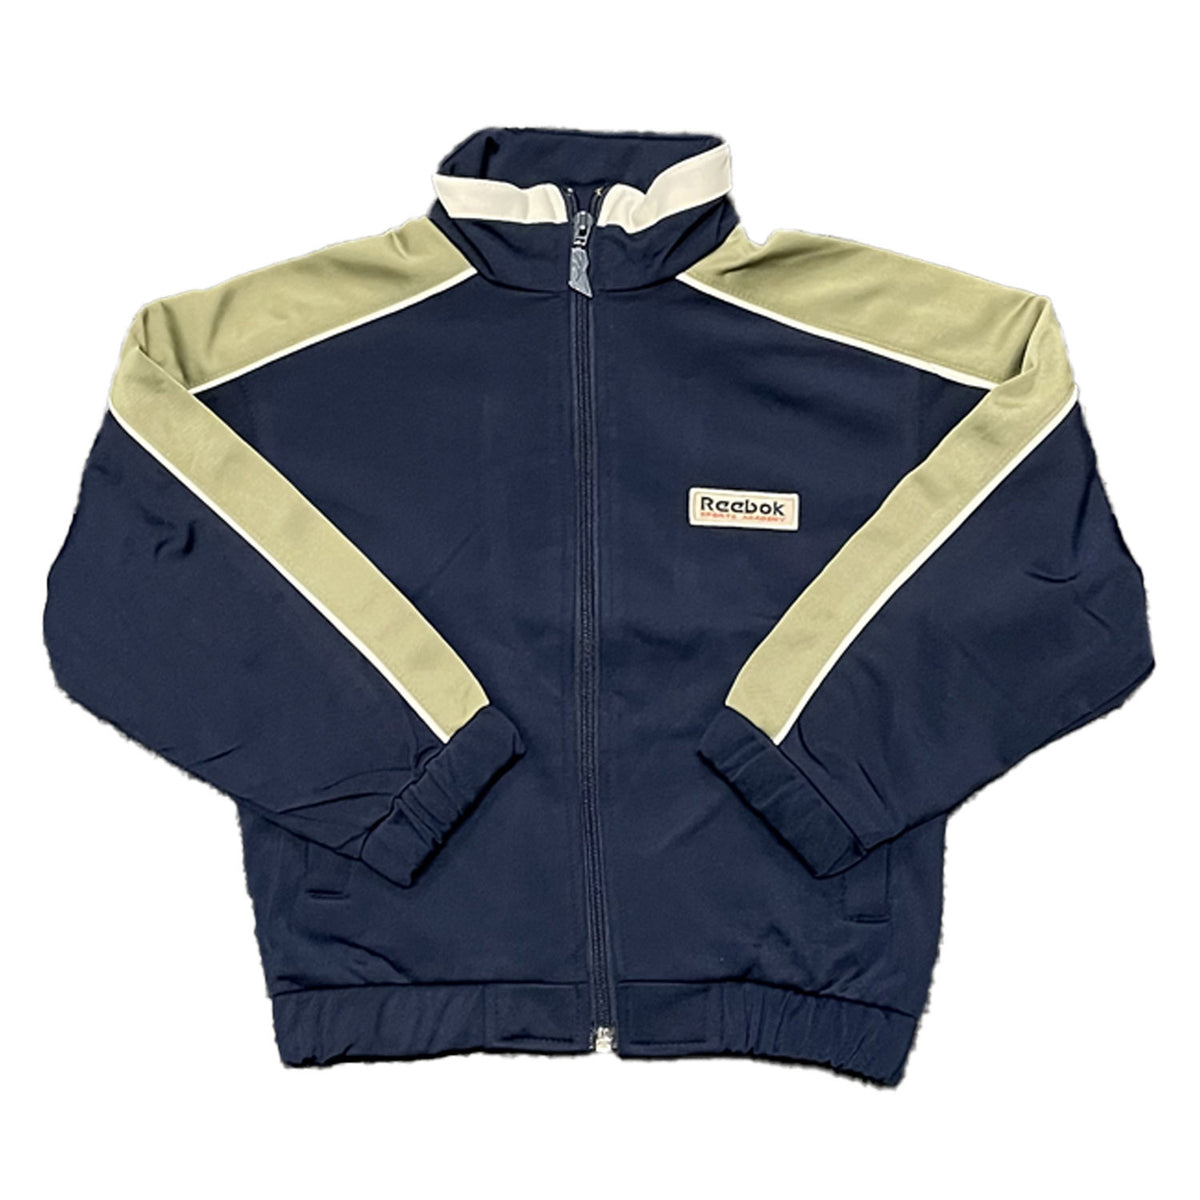 Reebok Infant Sports Range Jacket 3